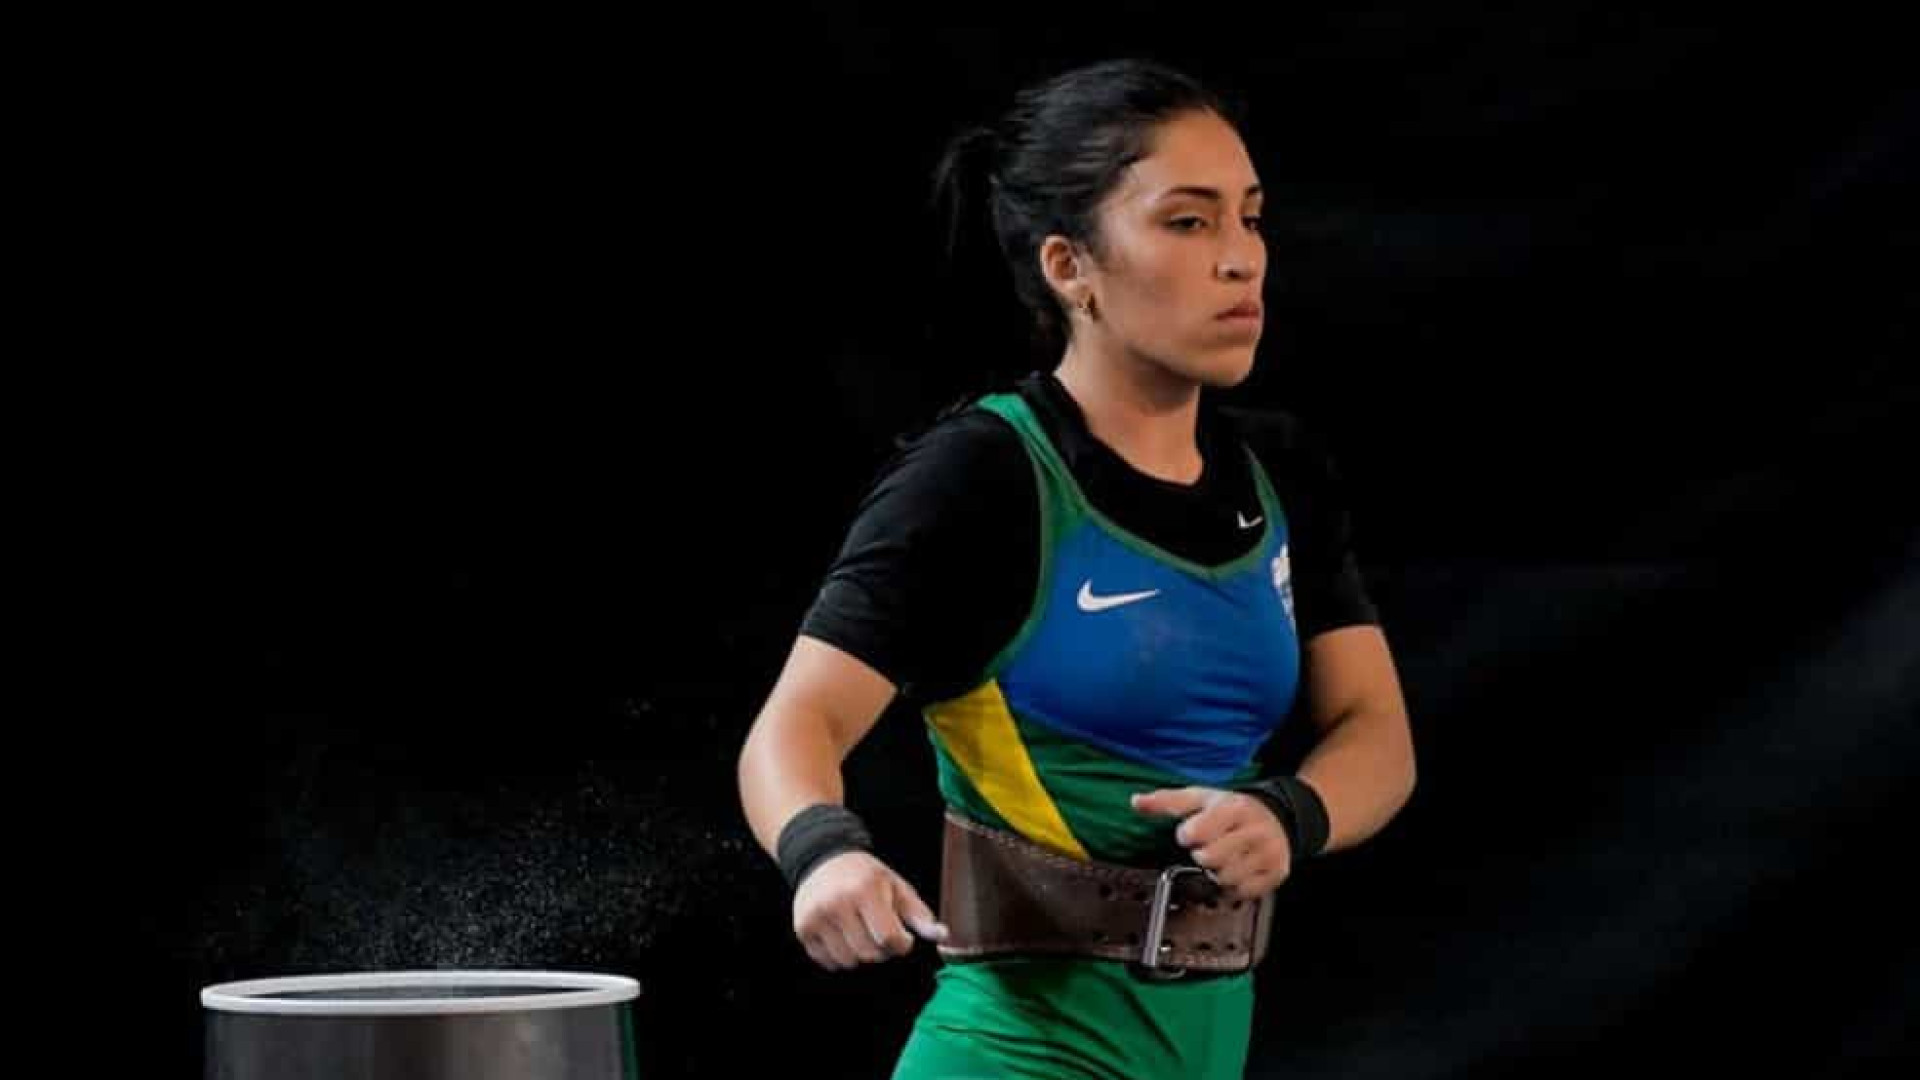 Brasileira do levantamento de peso é suspensa por doping e pode perder Olimpíada